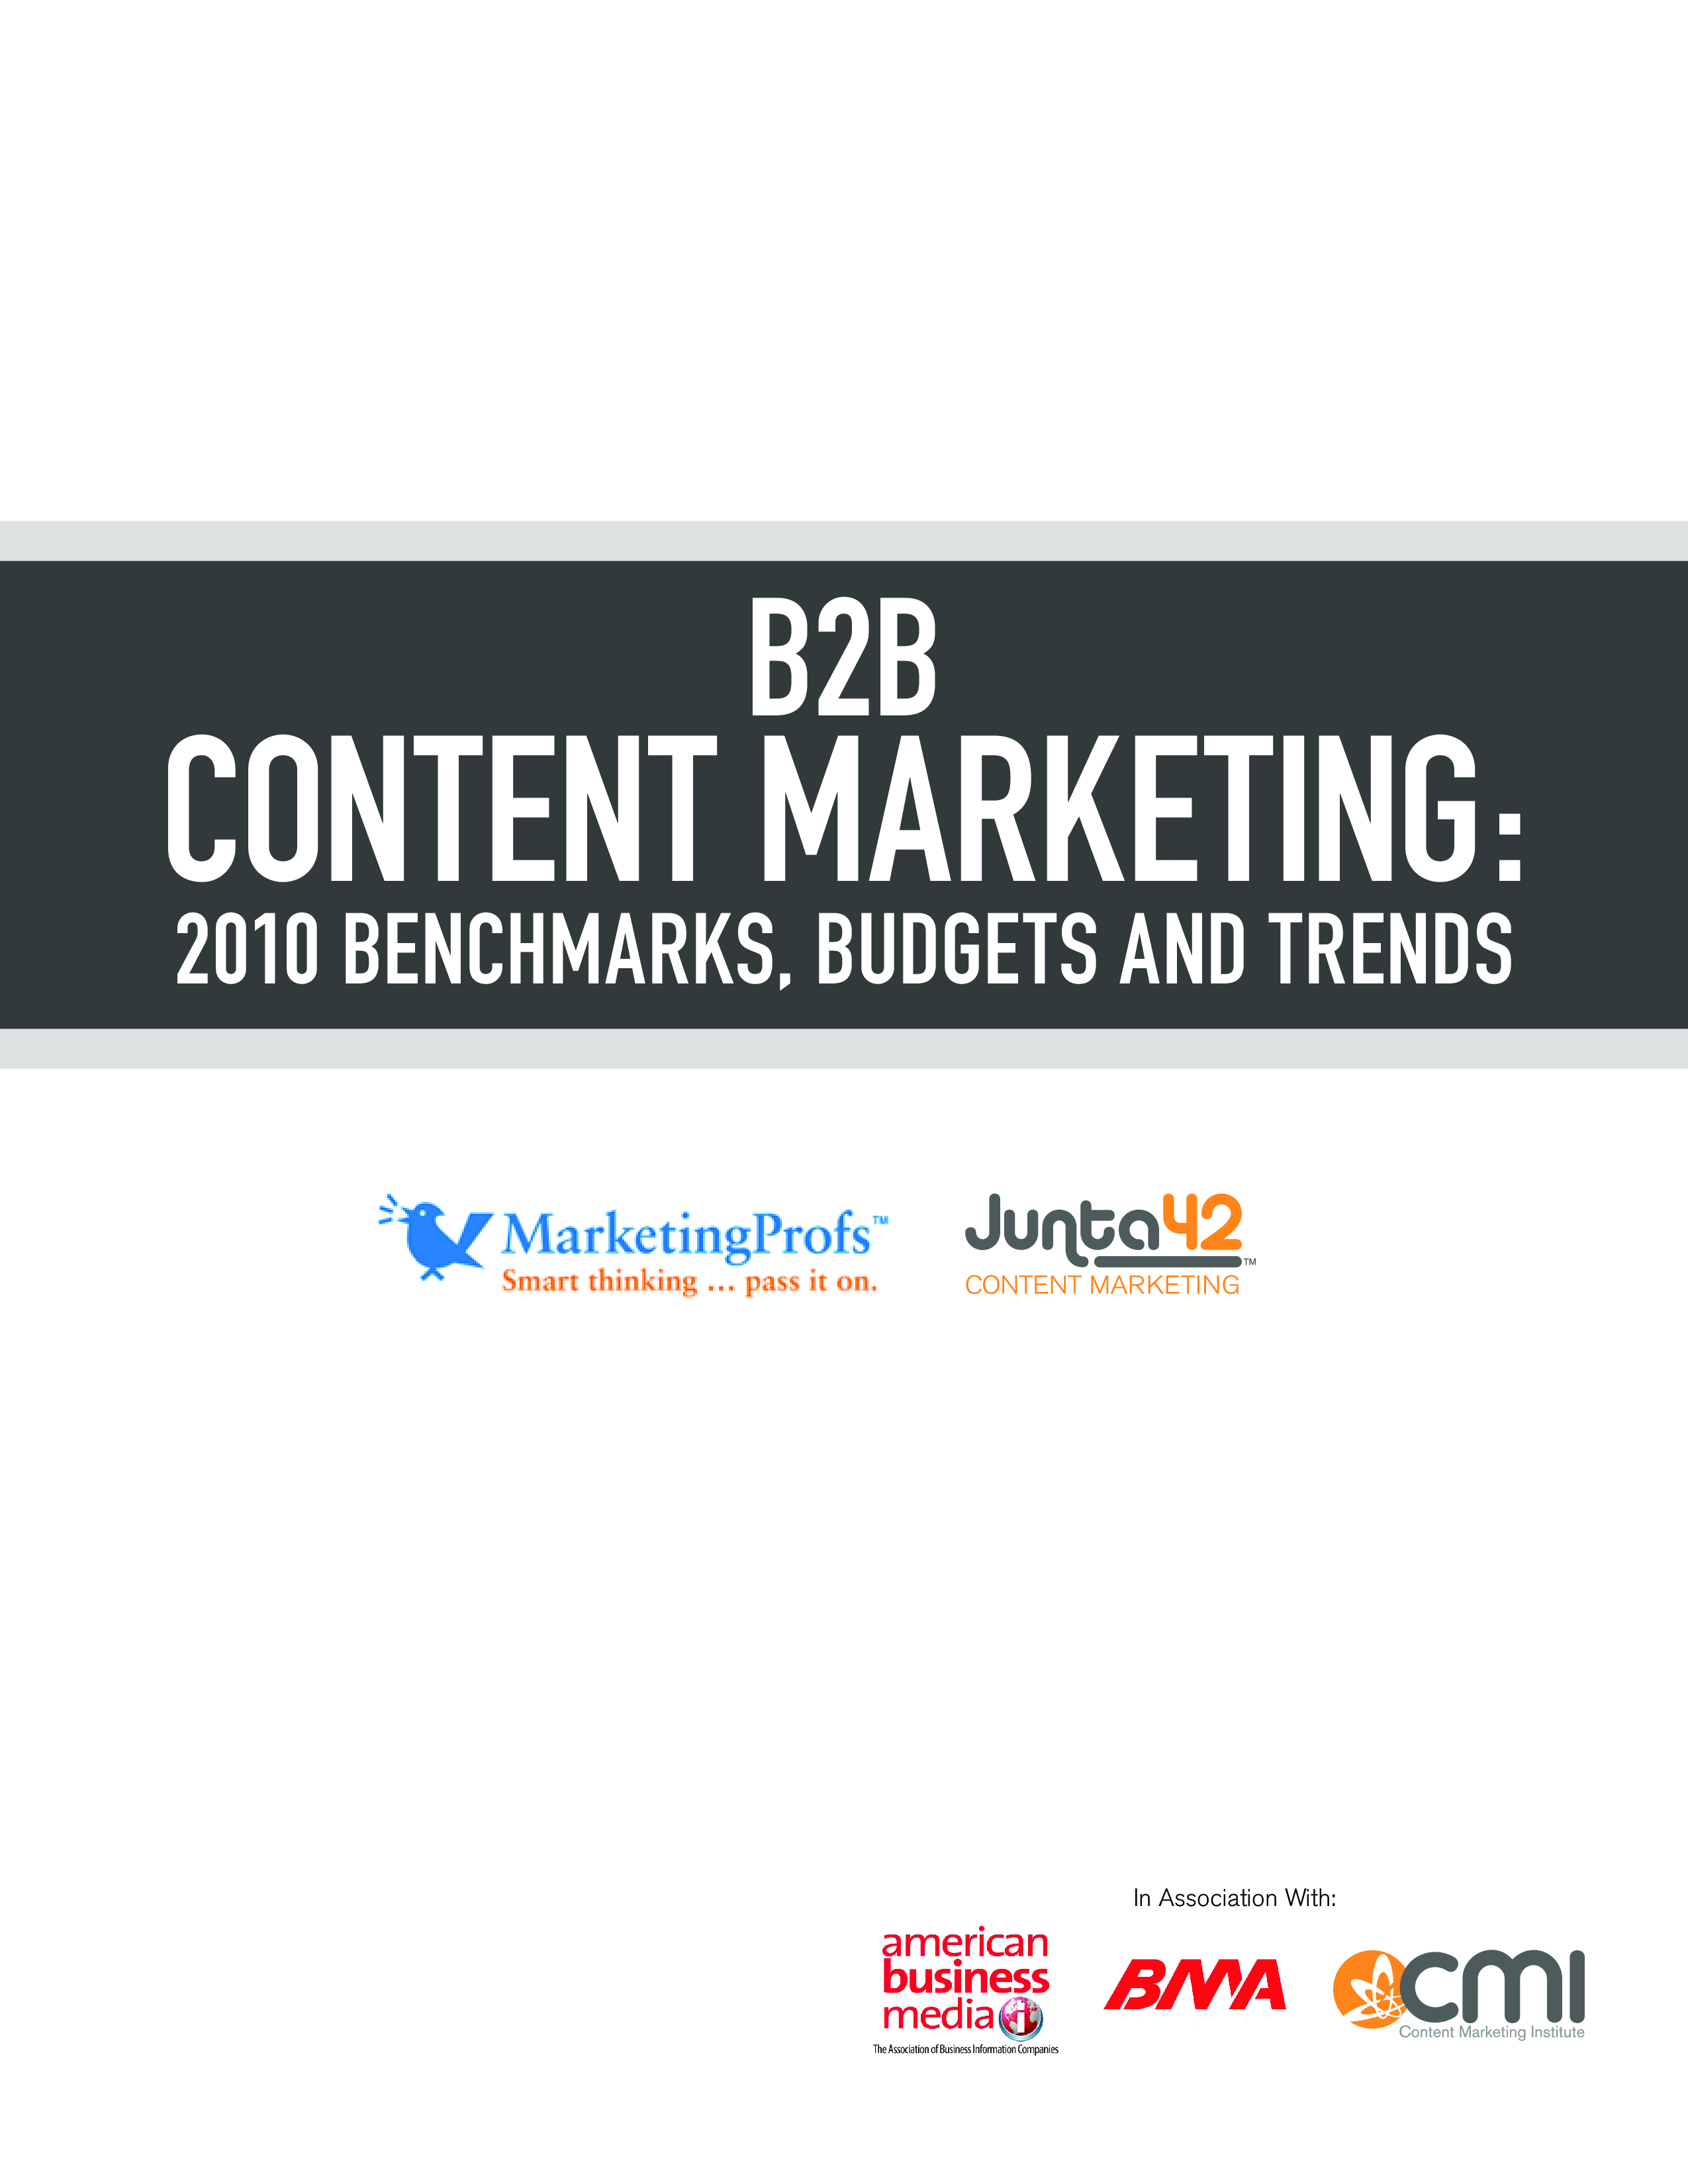 b2b content marketing template